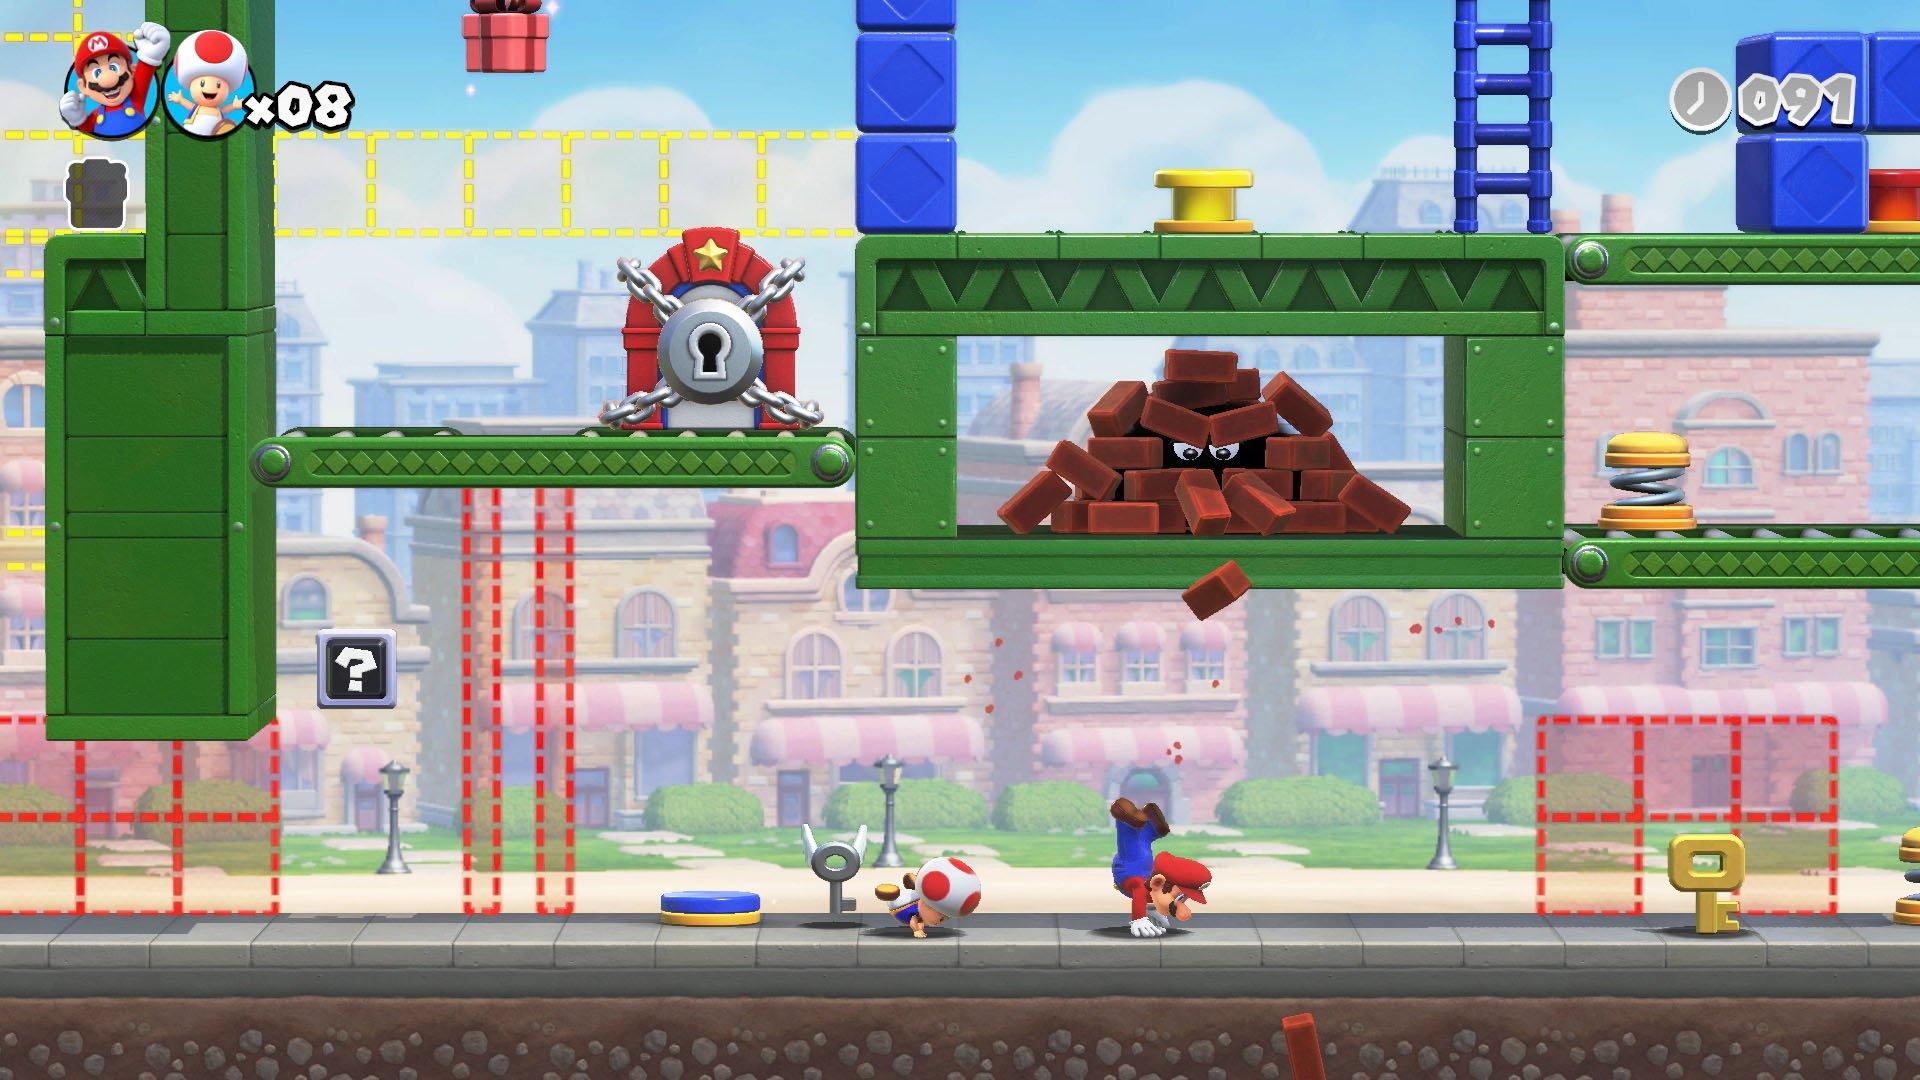 Mario vs. Donkey Kong Preview  All Things Nintendo - Game Informer